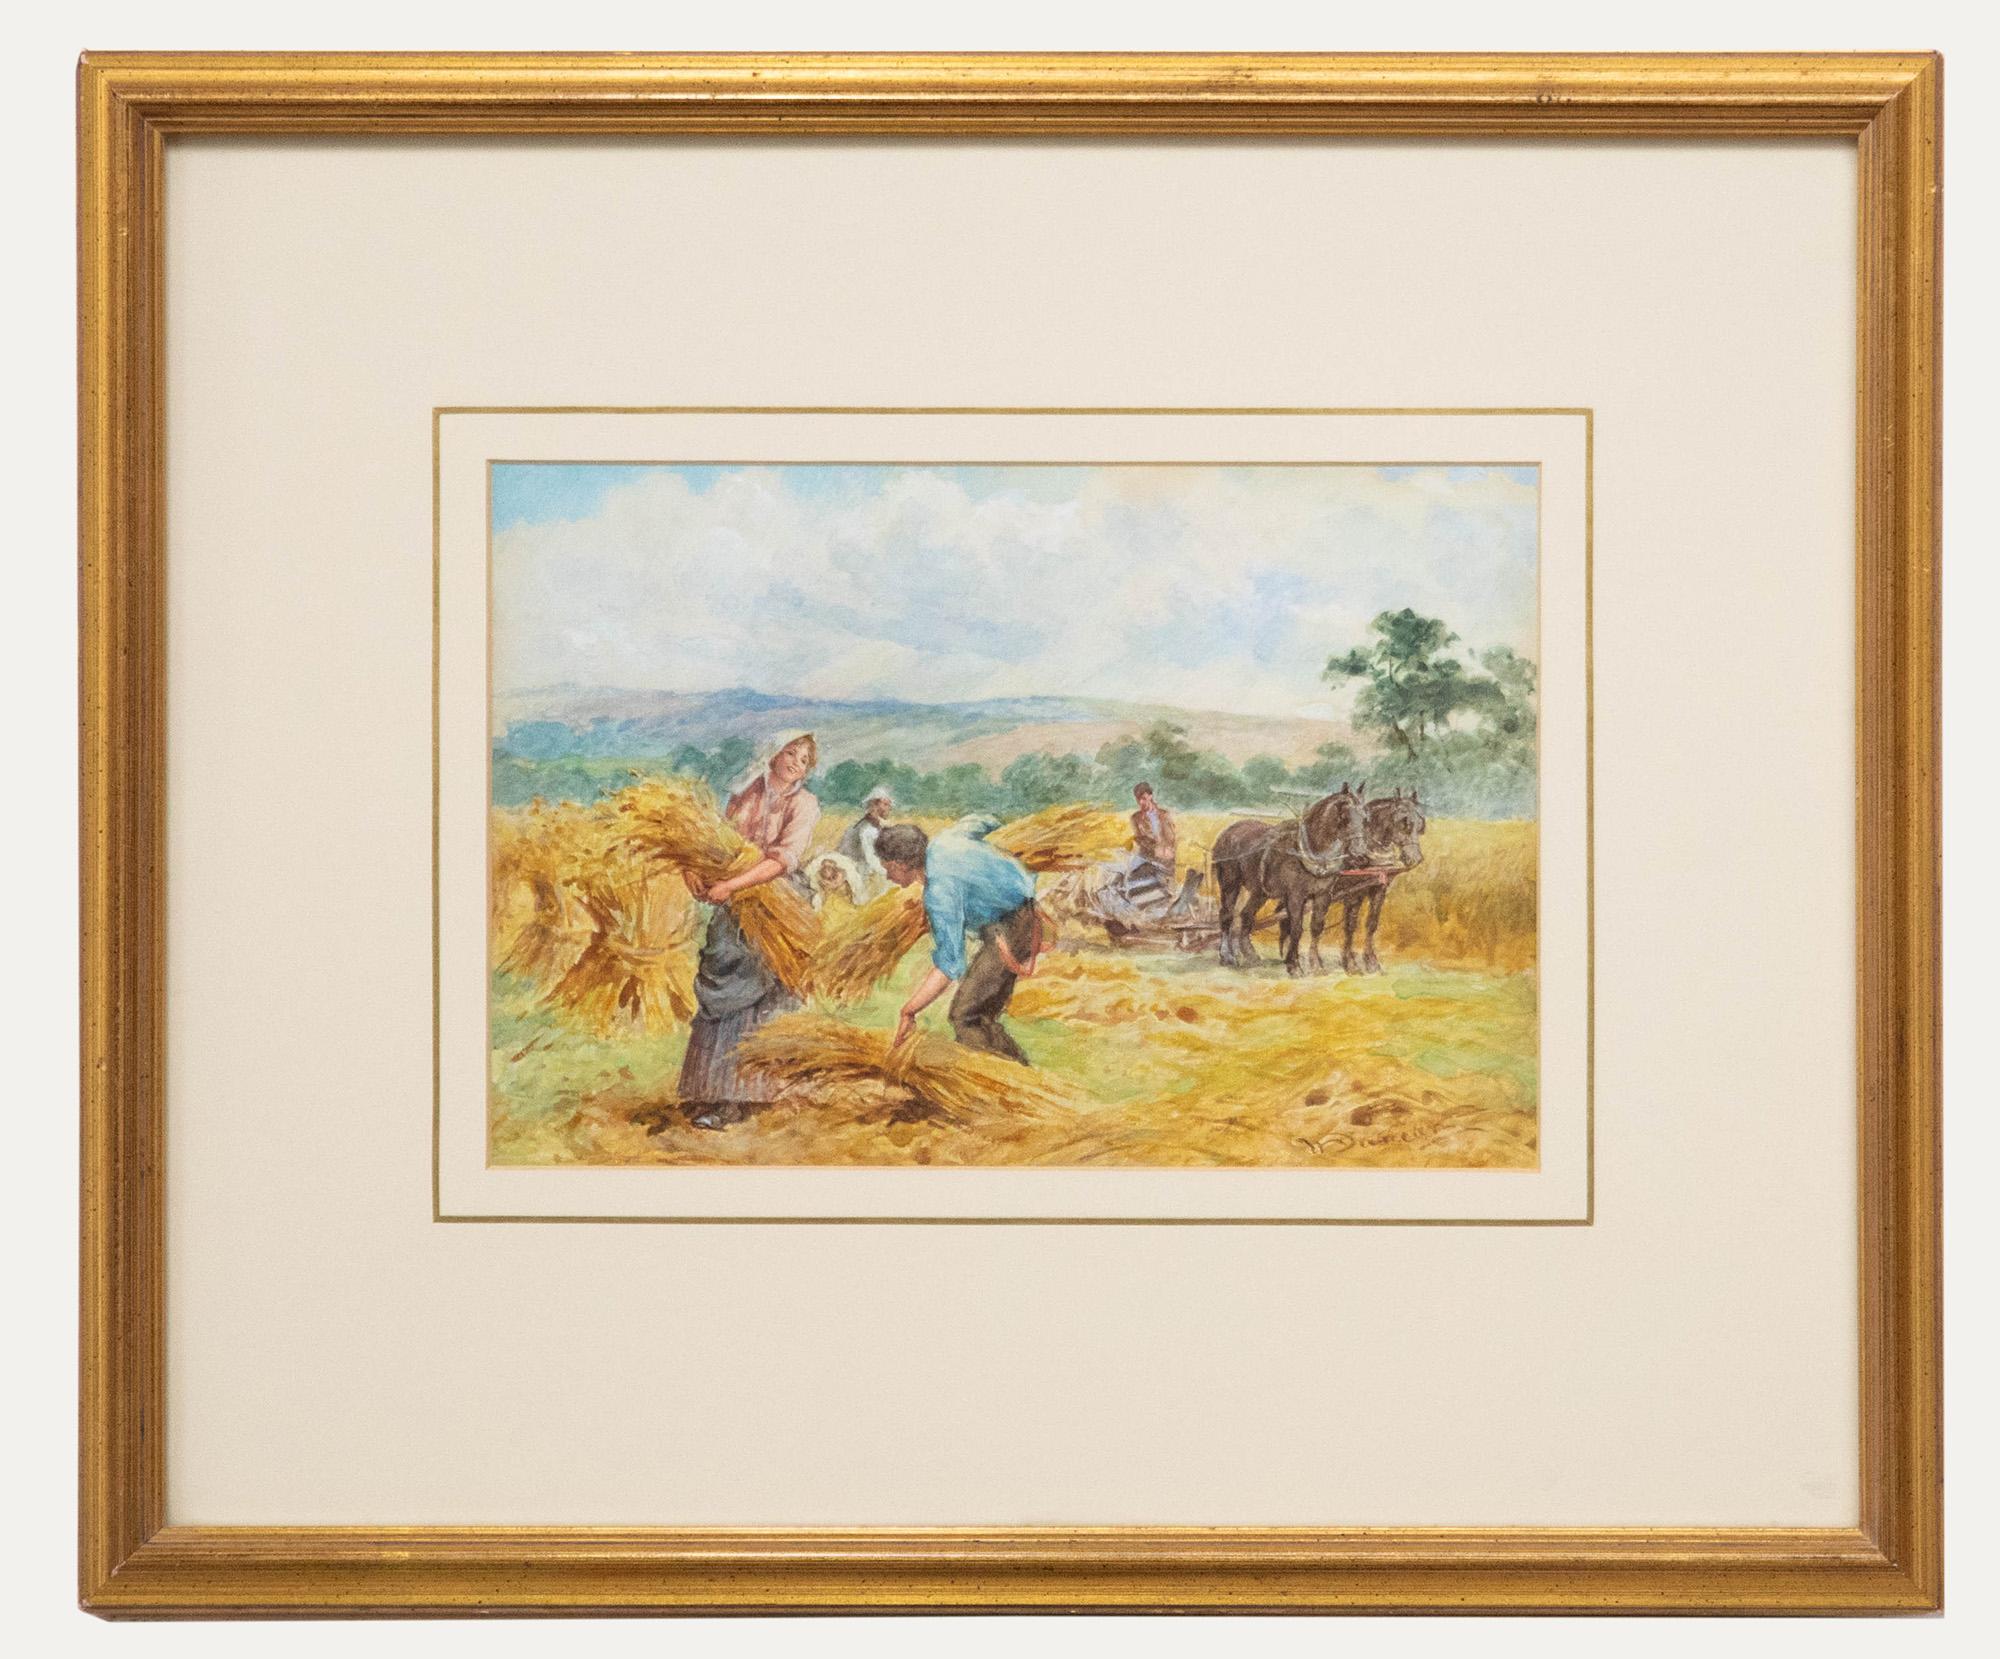 Unknown Landscape Art - Walter Duncan (1848-1932) - Early 20th Century Watercolour, A Joyful Harvest